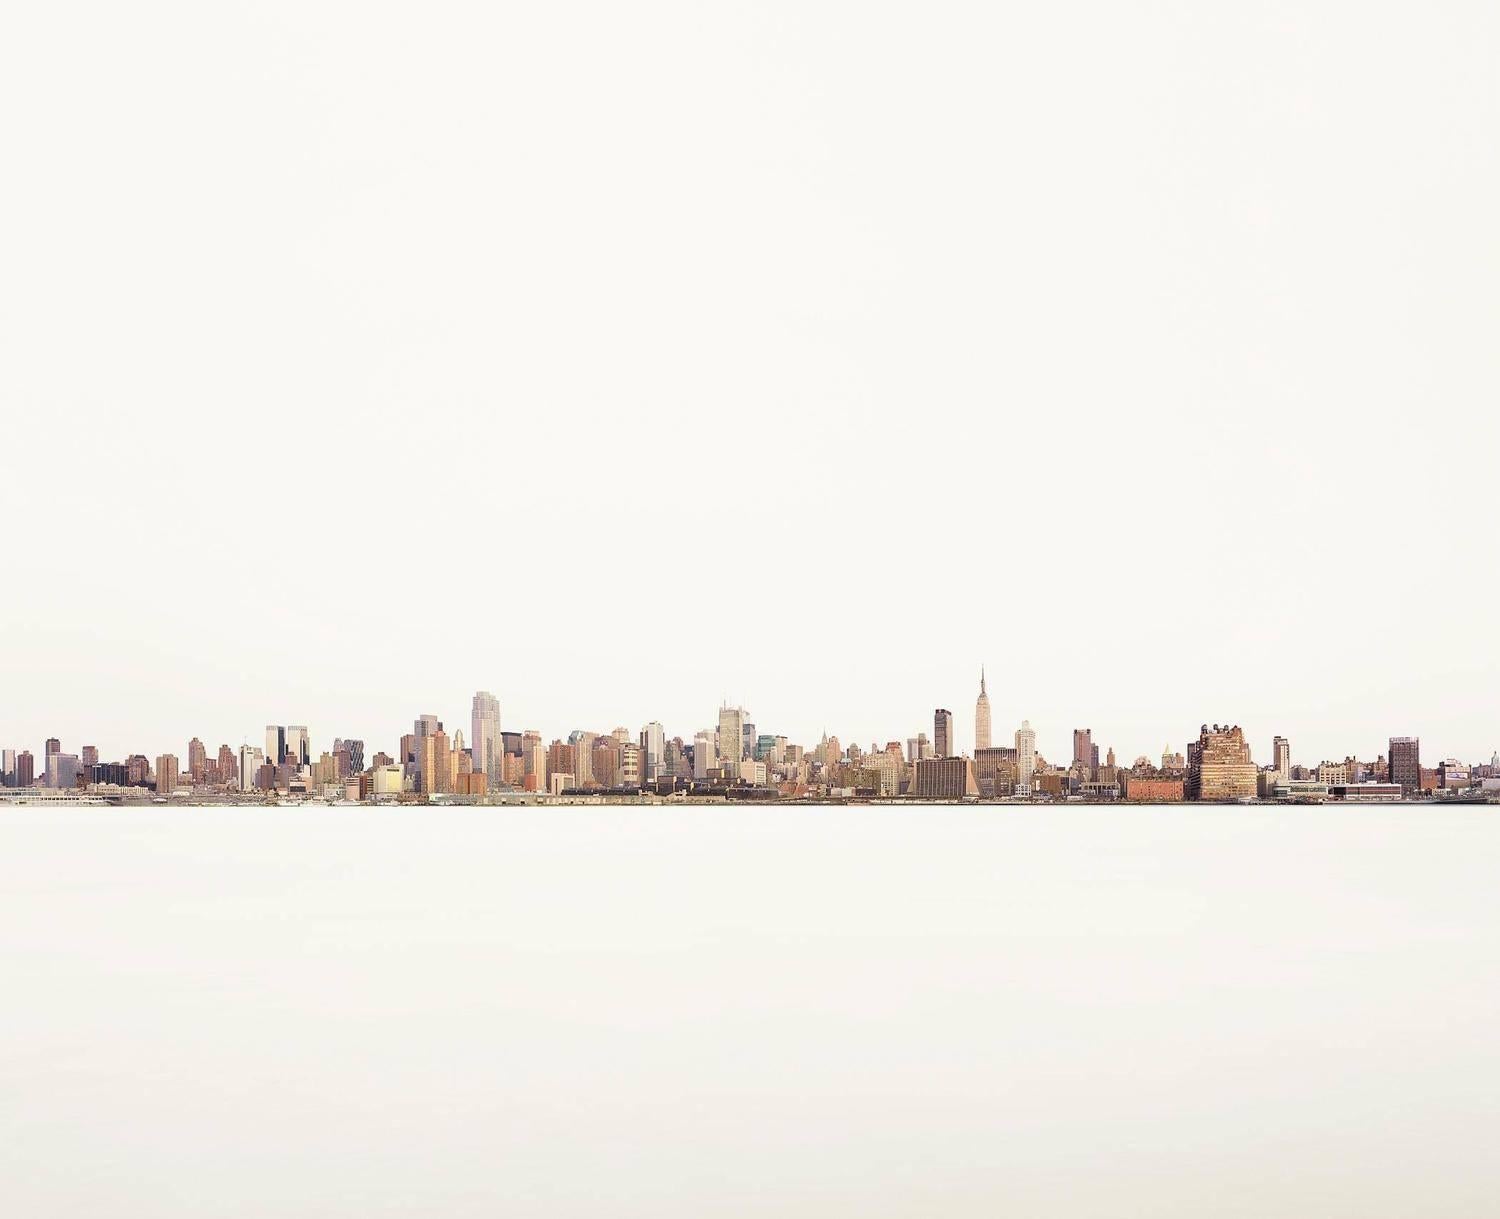 David Burdeny Landscape Photograph - New York City, USA